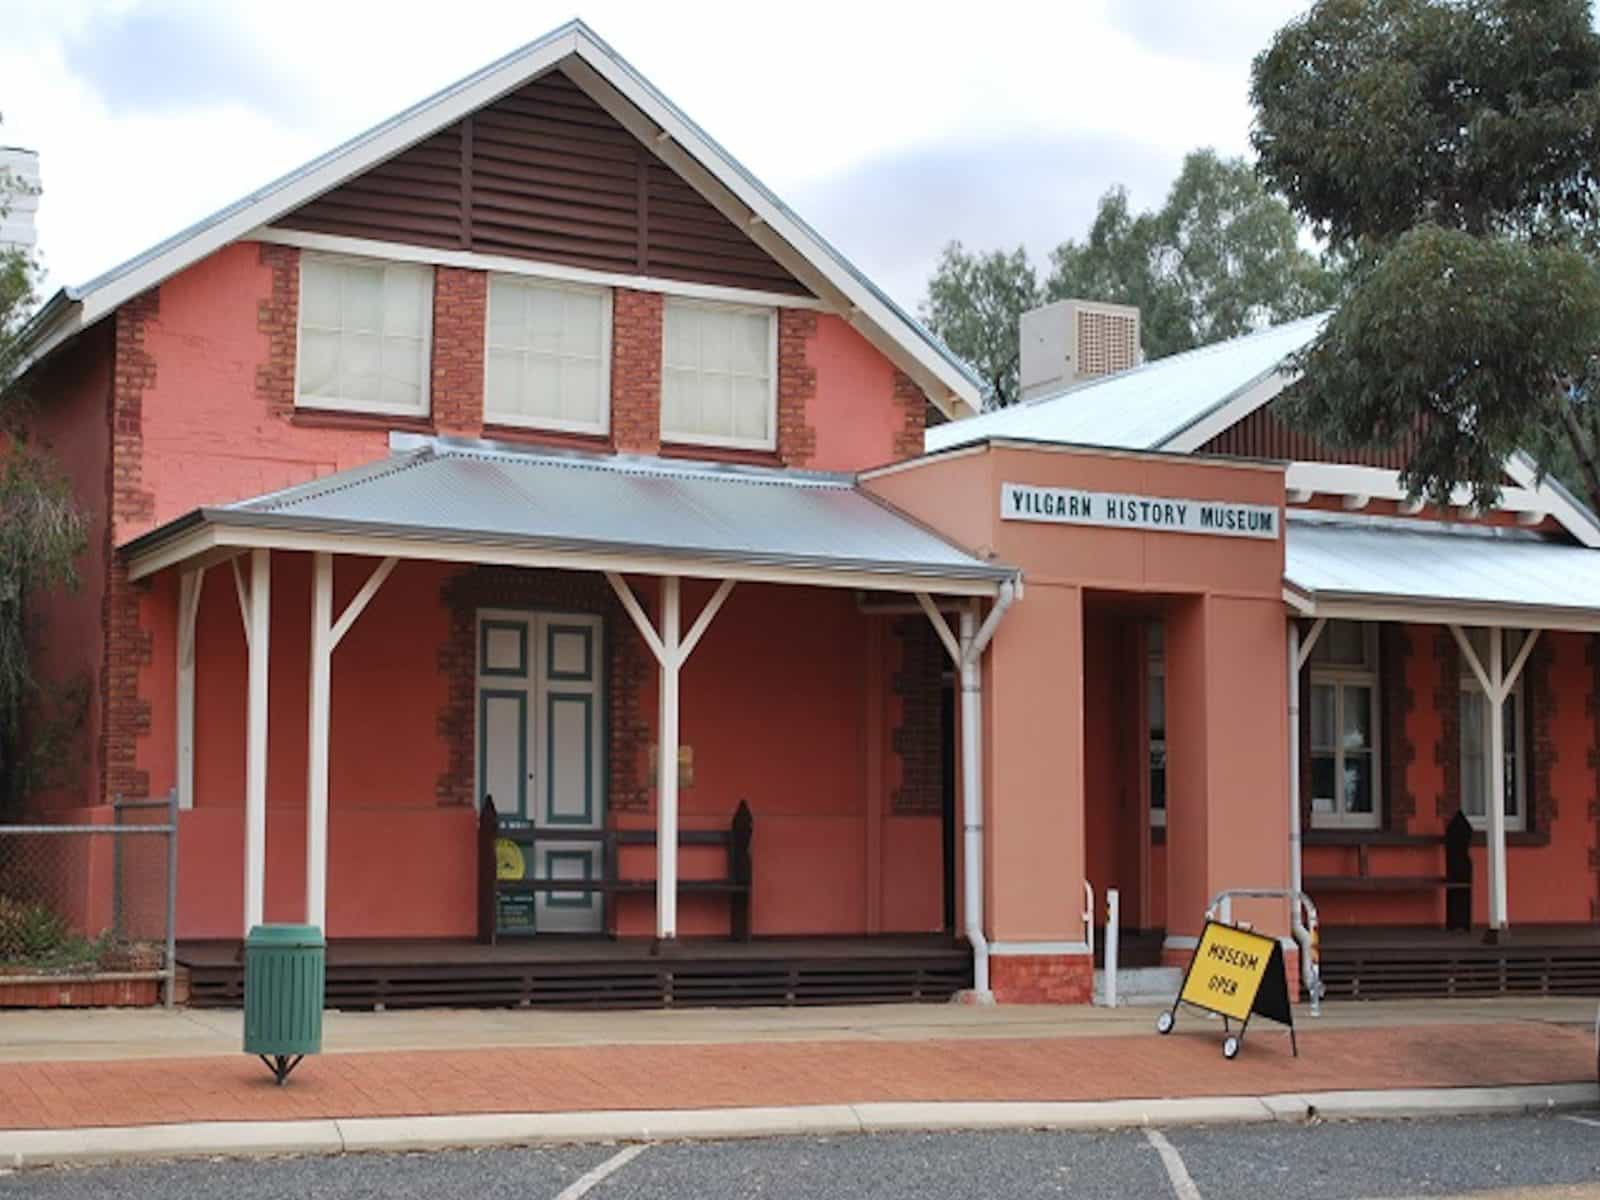 Yilgarn History Museum, Southern Cross, Western Australia